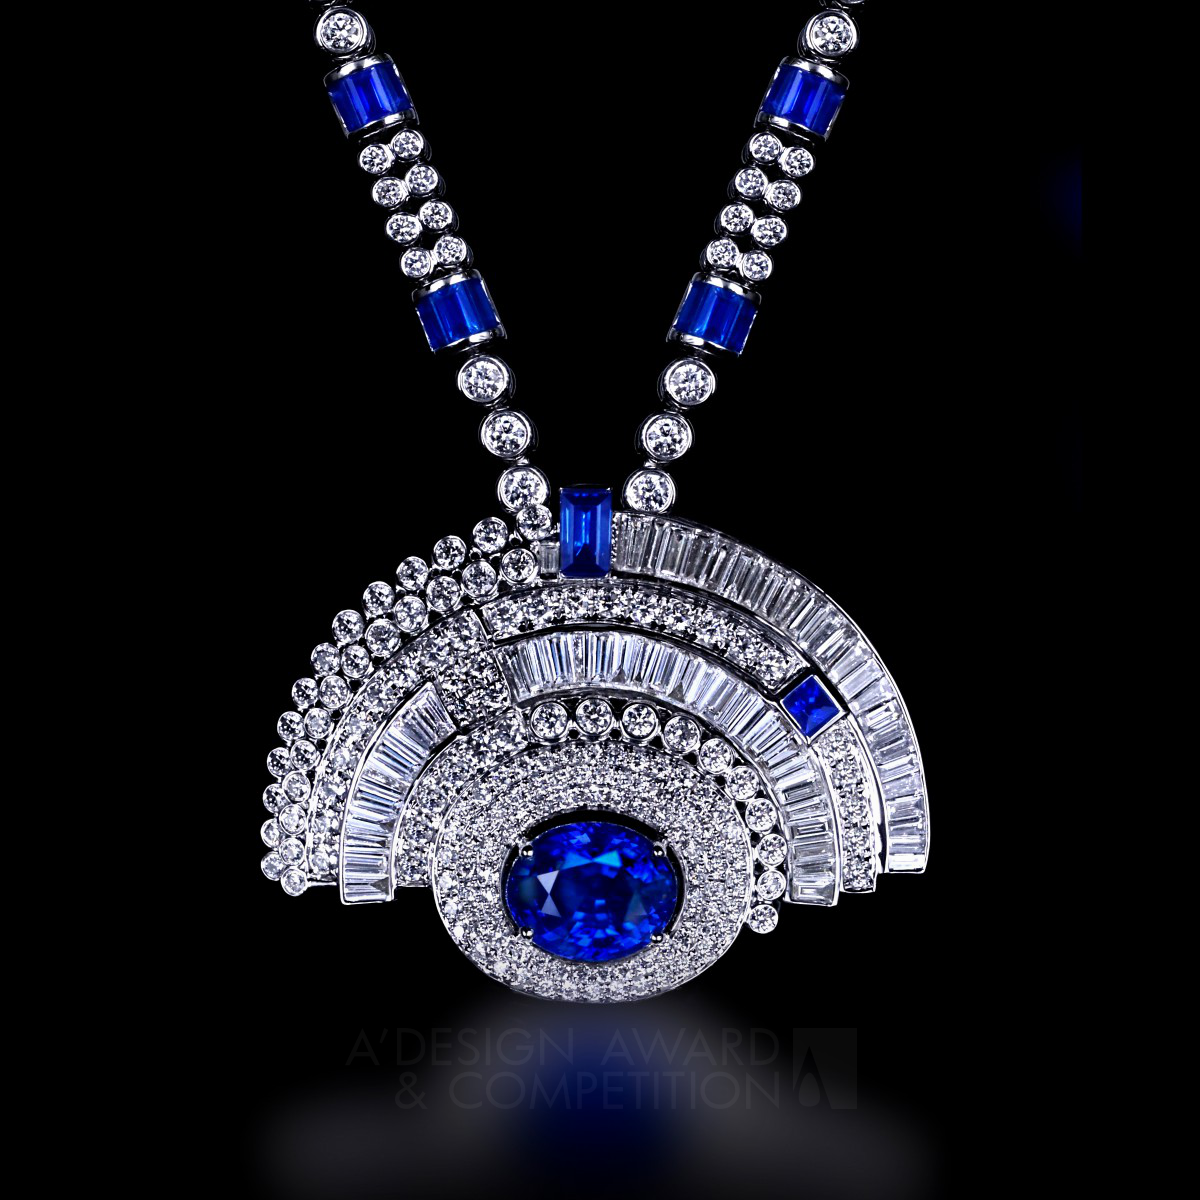 Region of Circles Multi Purpose Chain Brooch Set by Zheyu Wang Iron Jewelry Design Award Winner 2024 